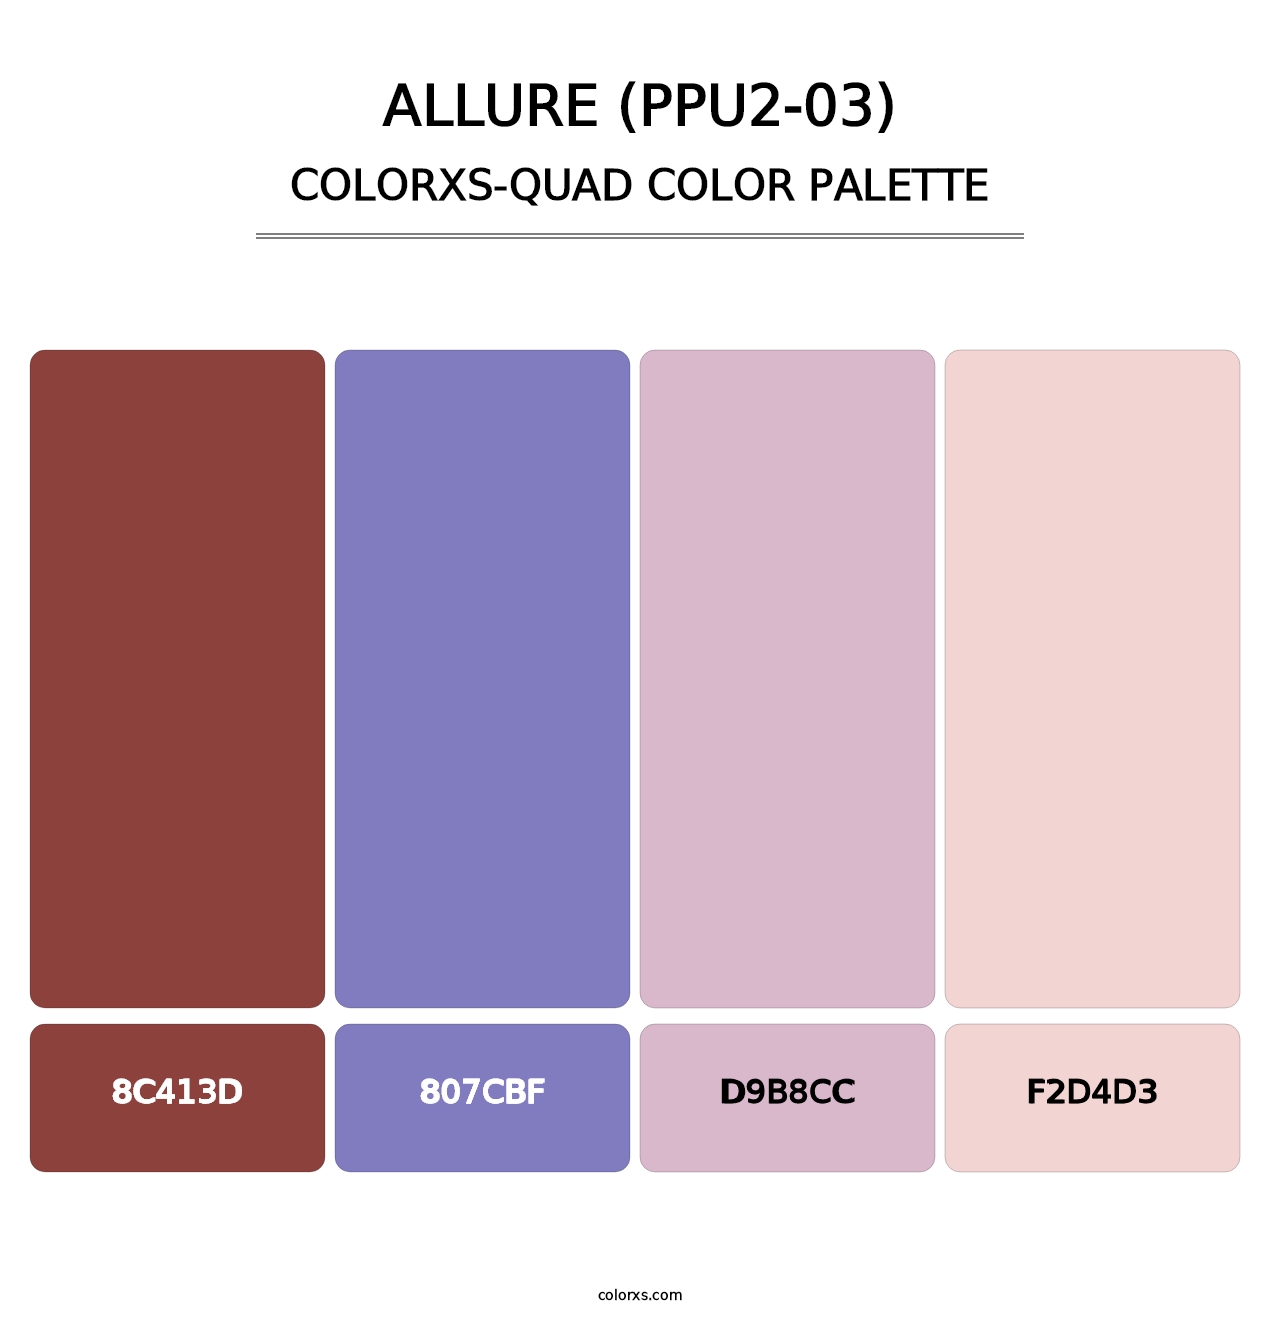 Allure (PPU2-03) - Colorxs Quad Palette